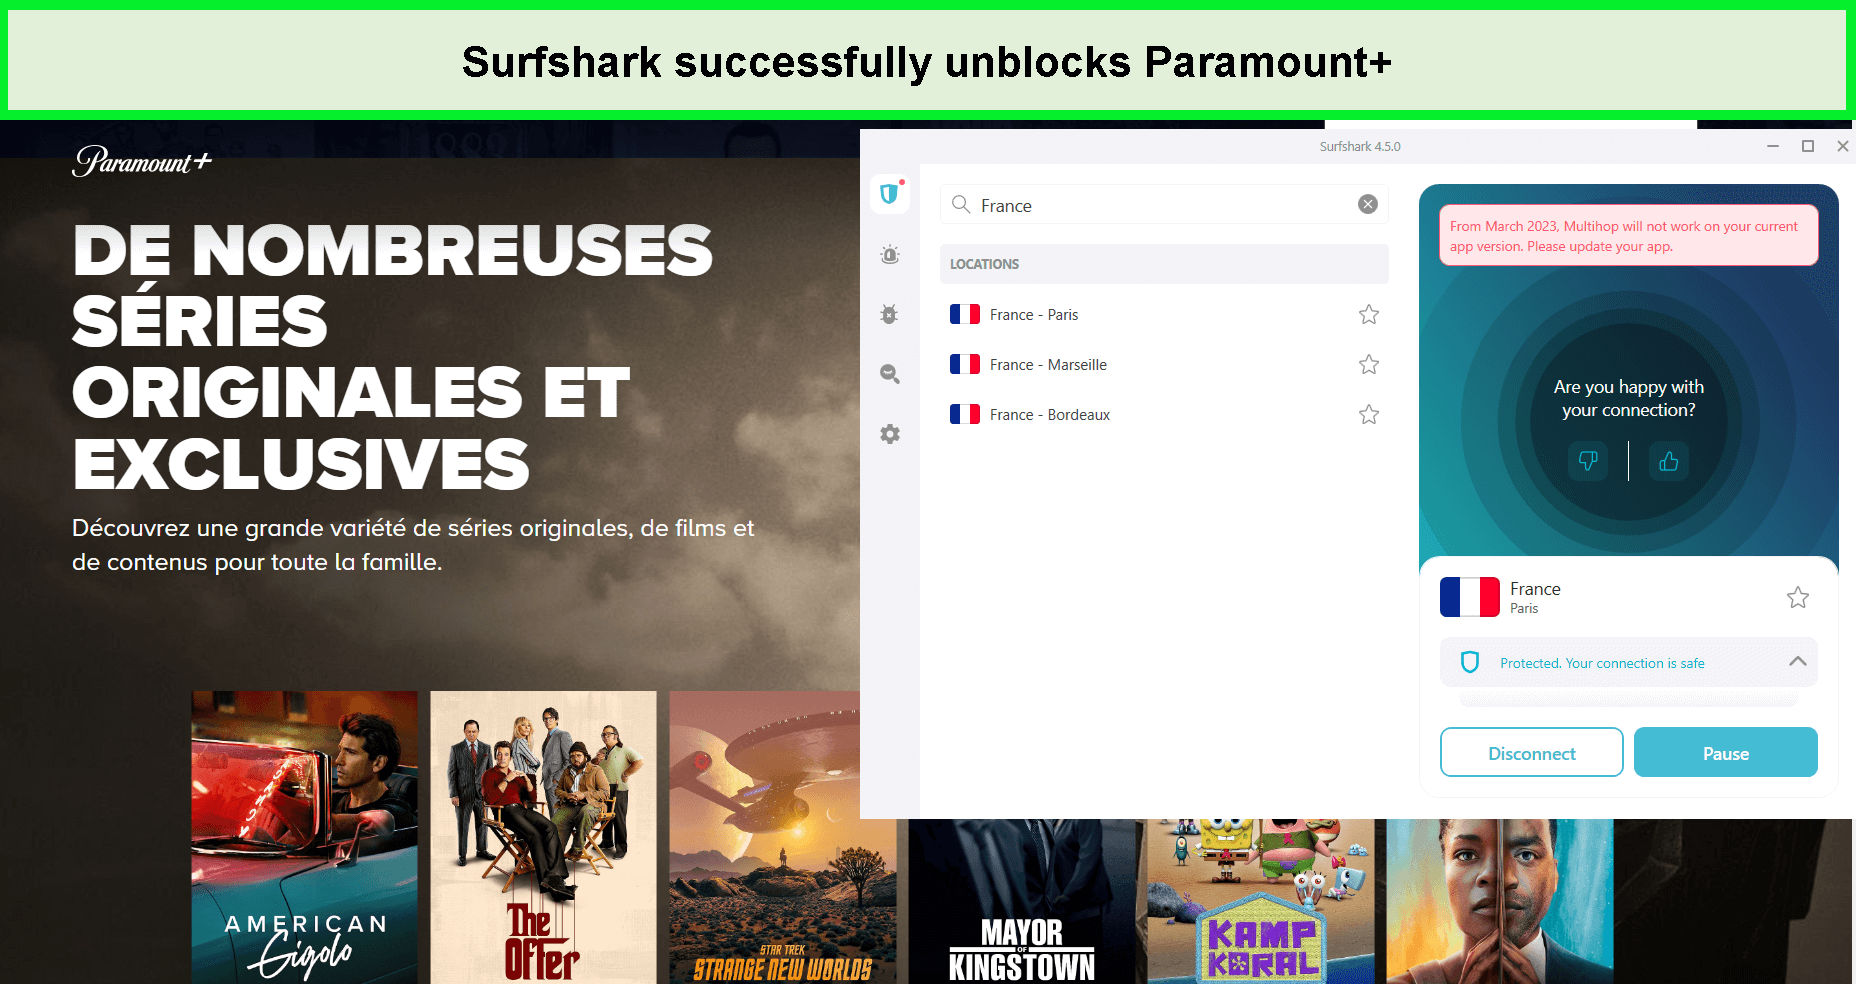 surfshark-unblock-paramount-plus-outside-france